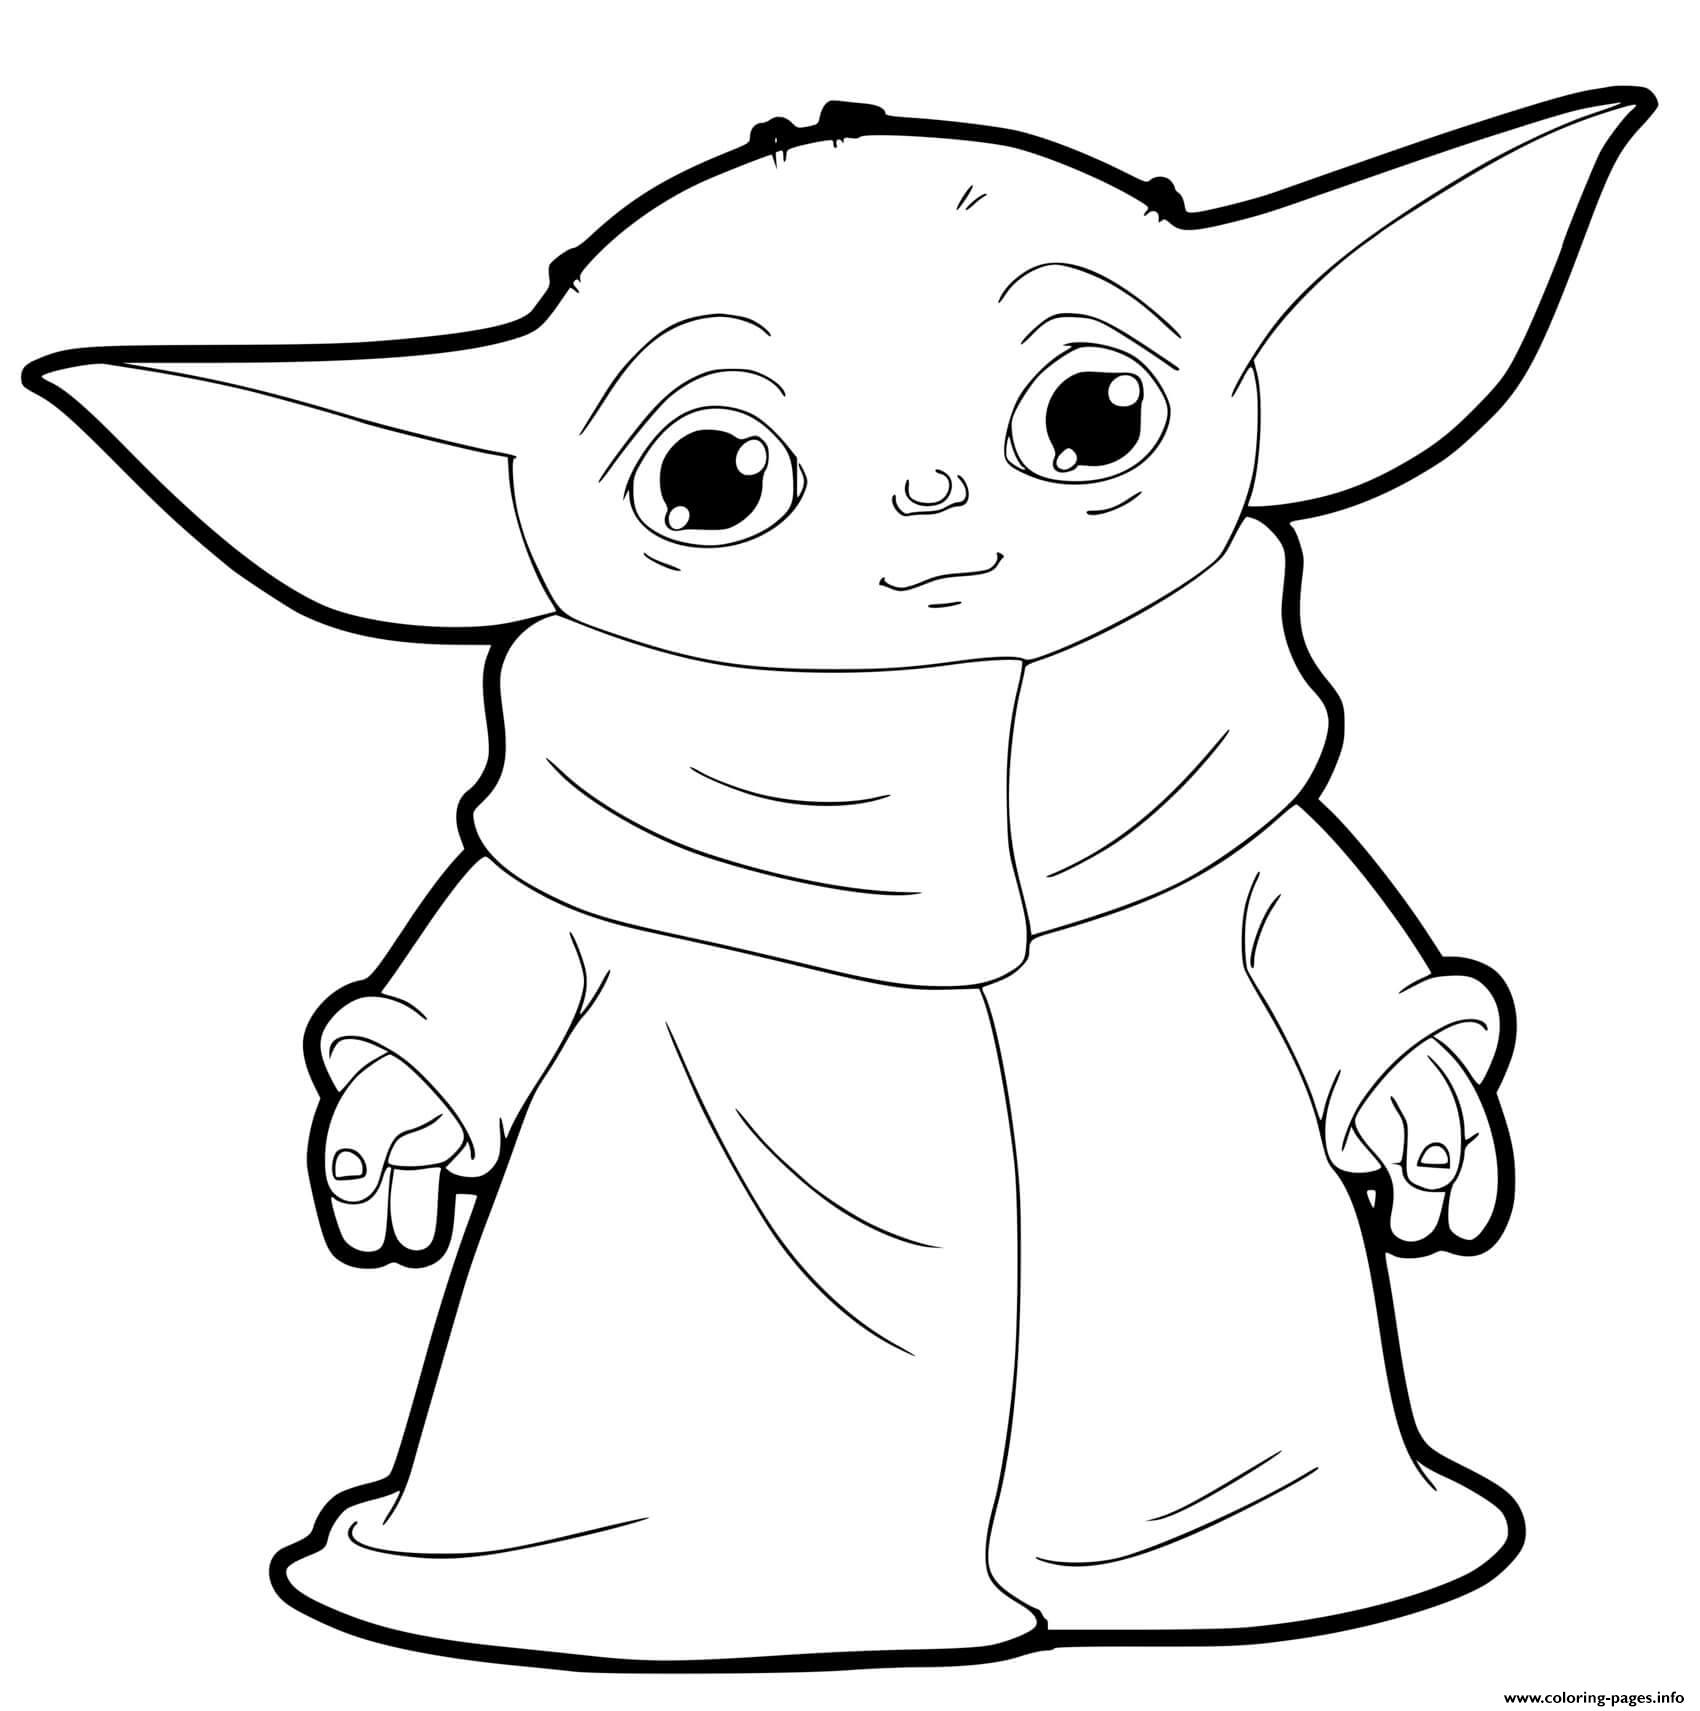 Baby Yoda Grogu coloring